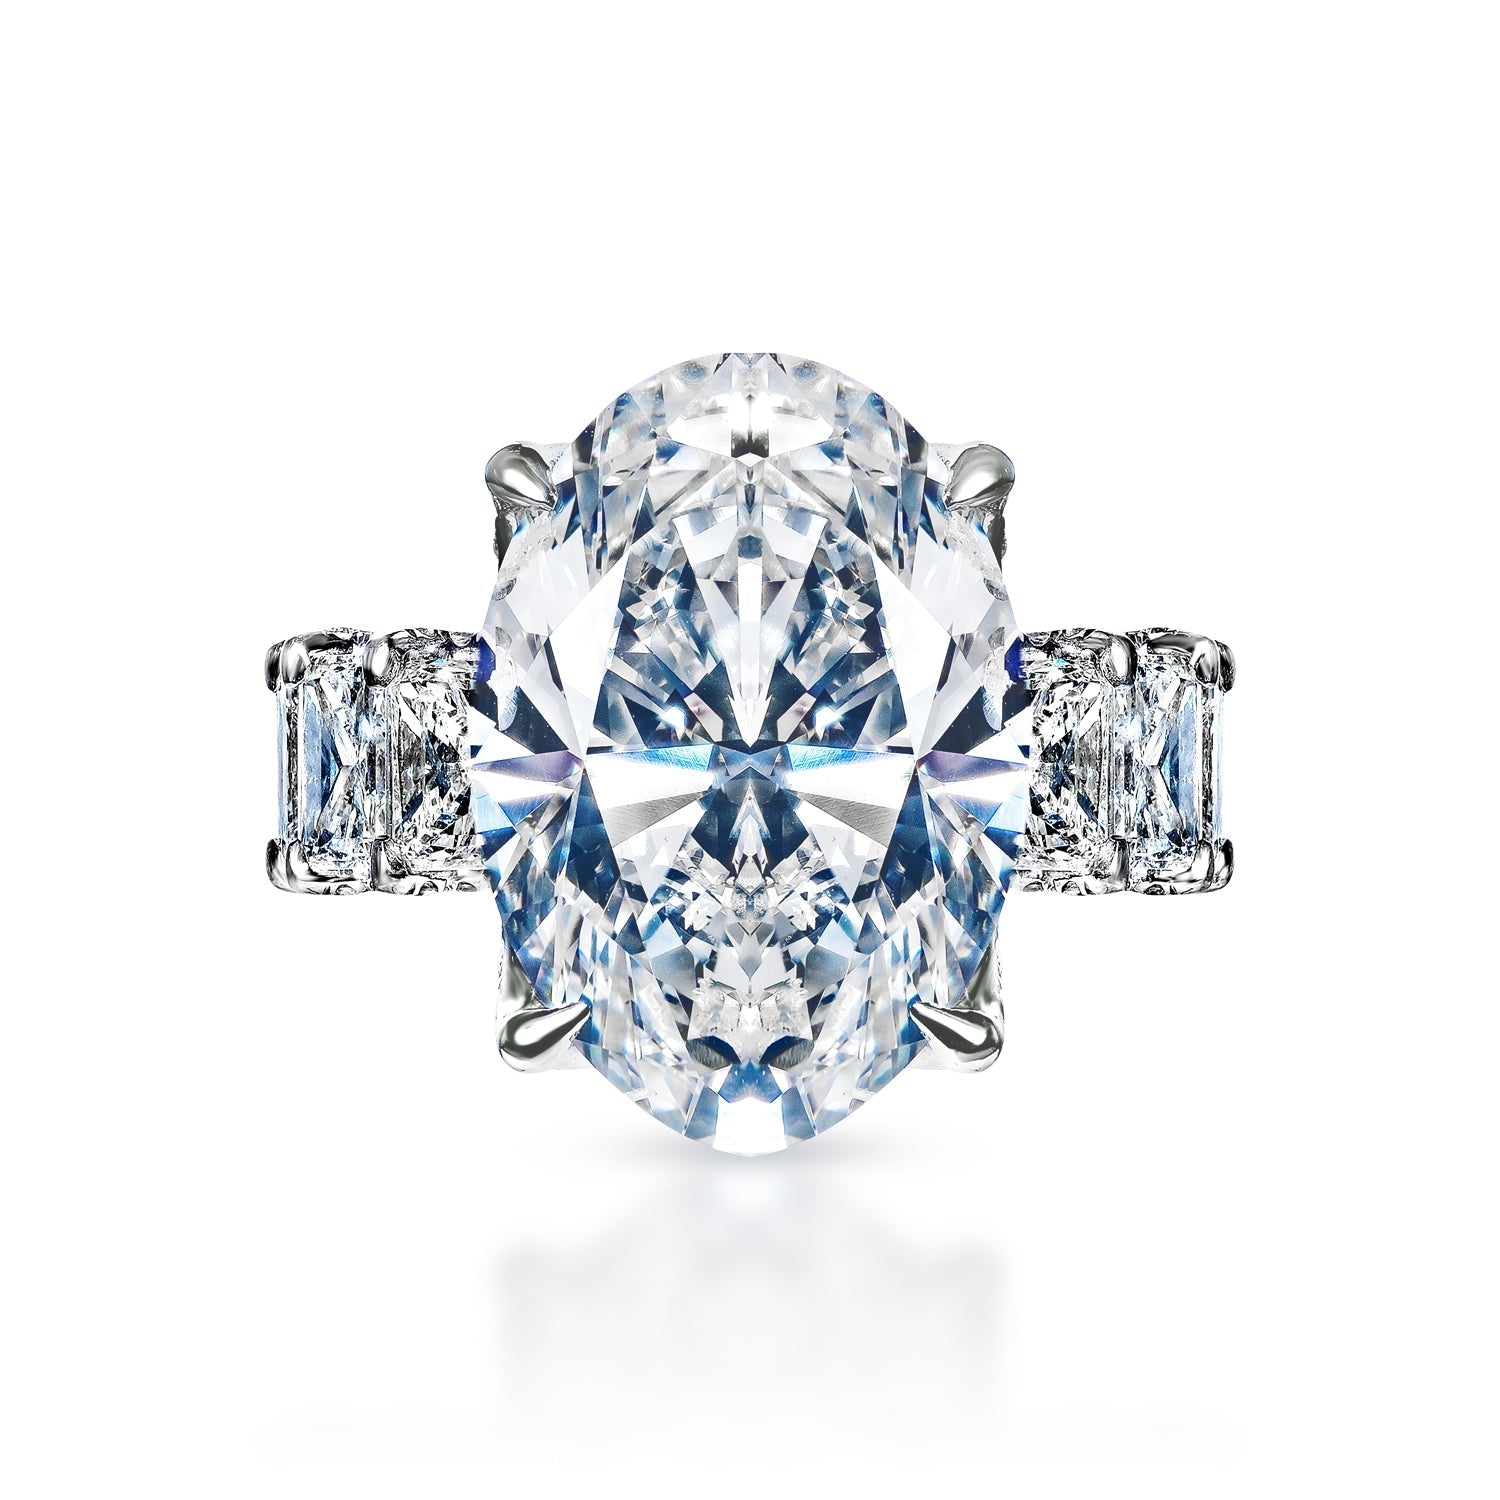 Kara 24 Carat Oval Cut Diamond Engagement Ring in Platinum. GIA Certified Front View